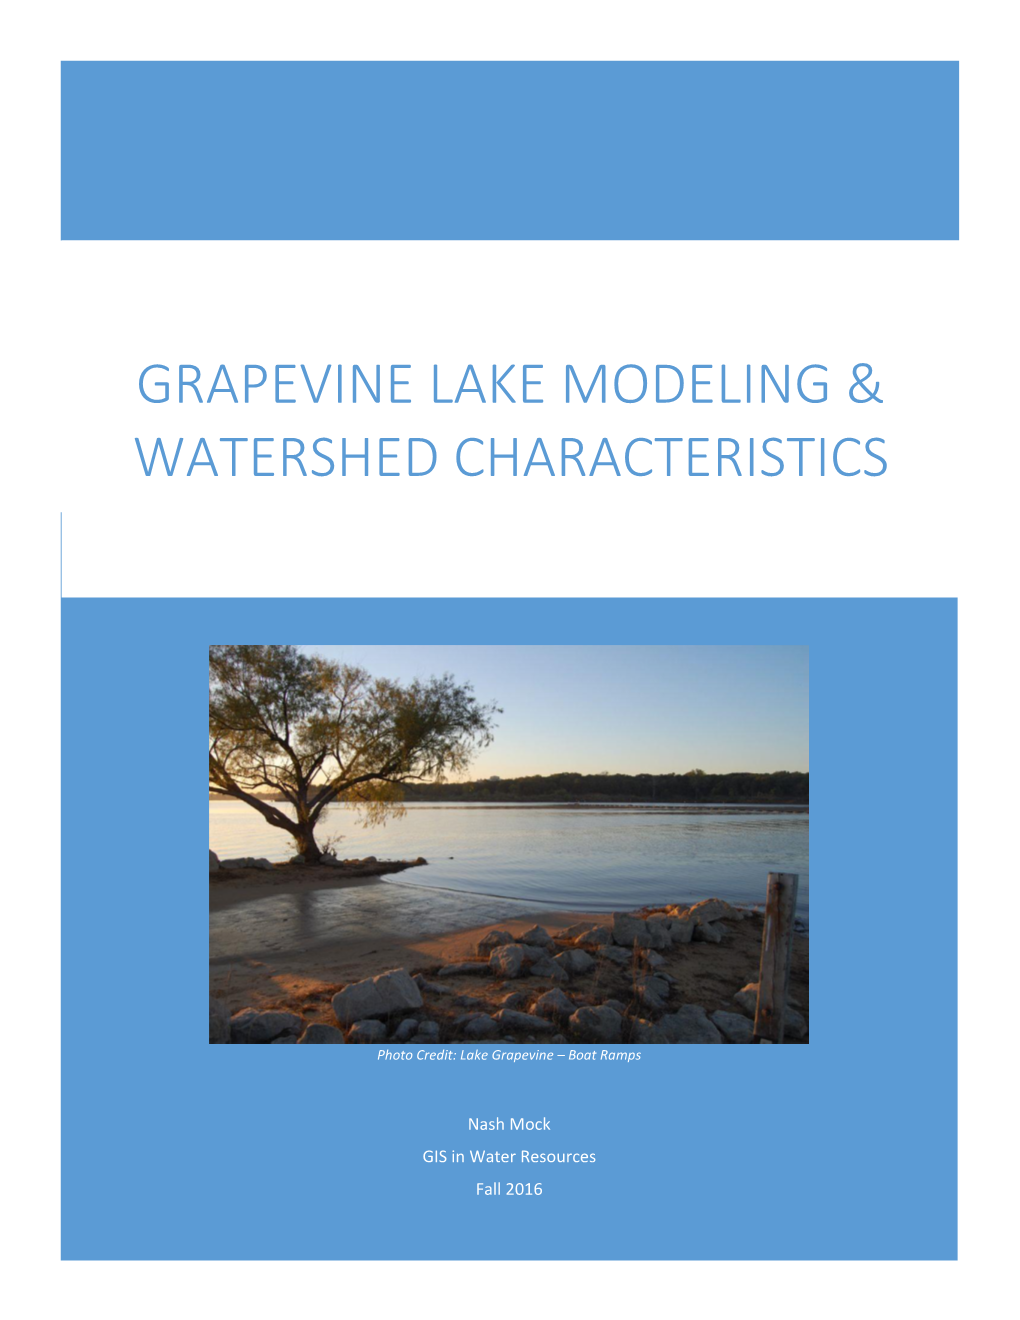 Grapevine Lake Modeling & Watershed Characteristics